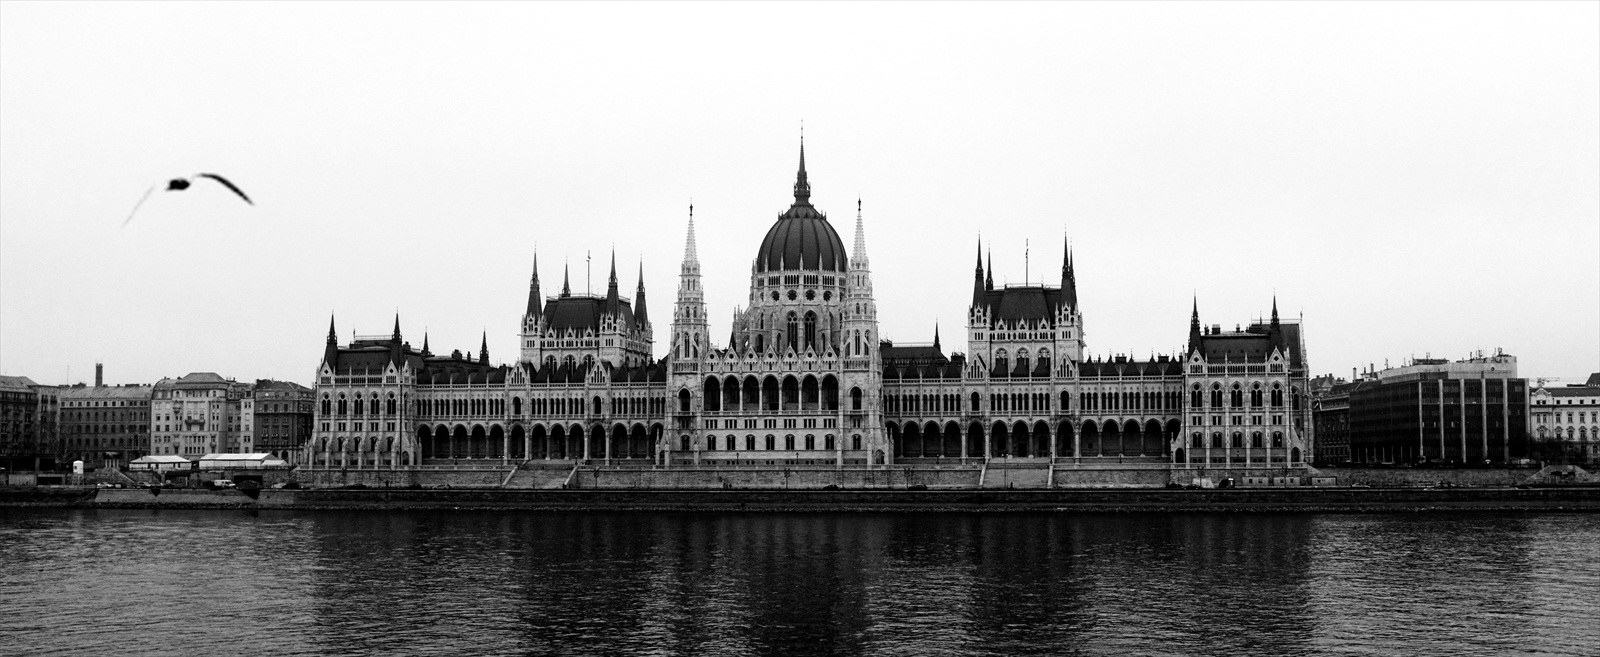 Parliament I